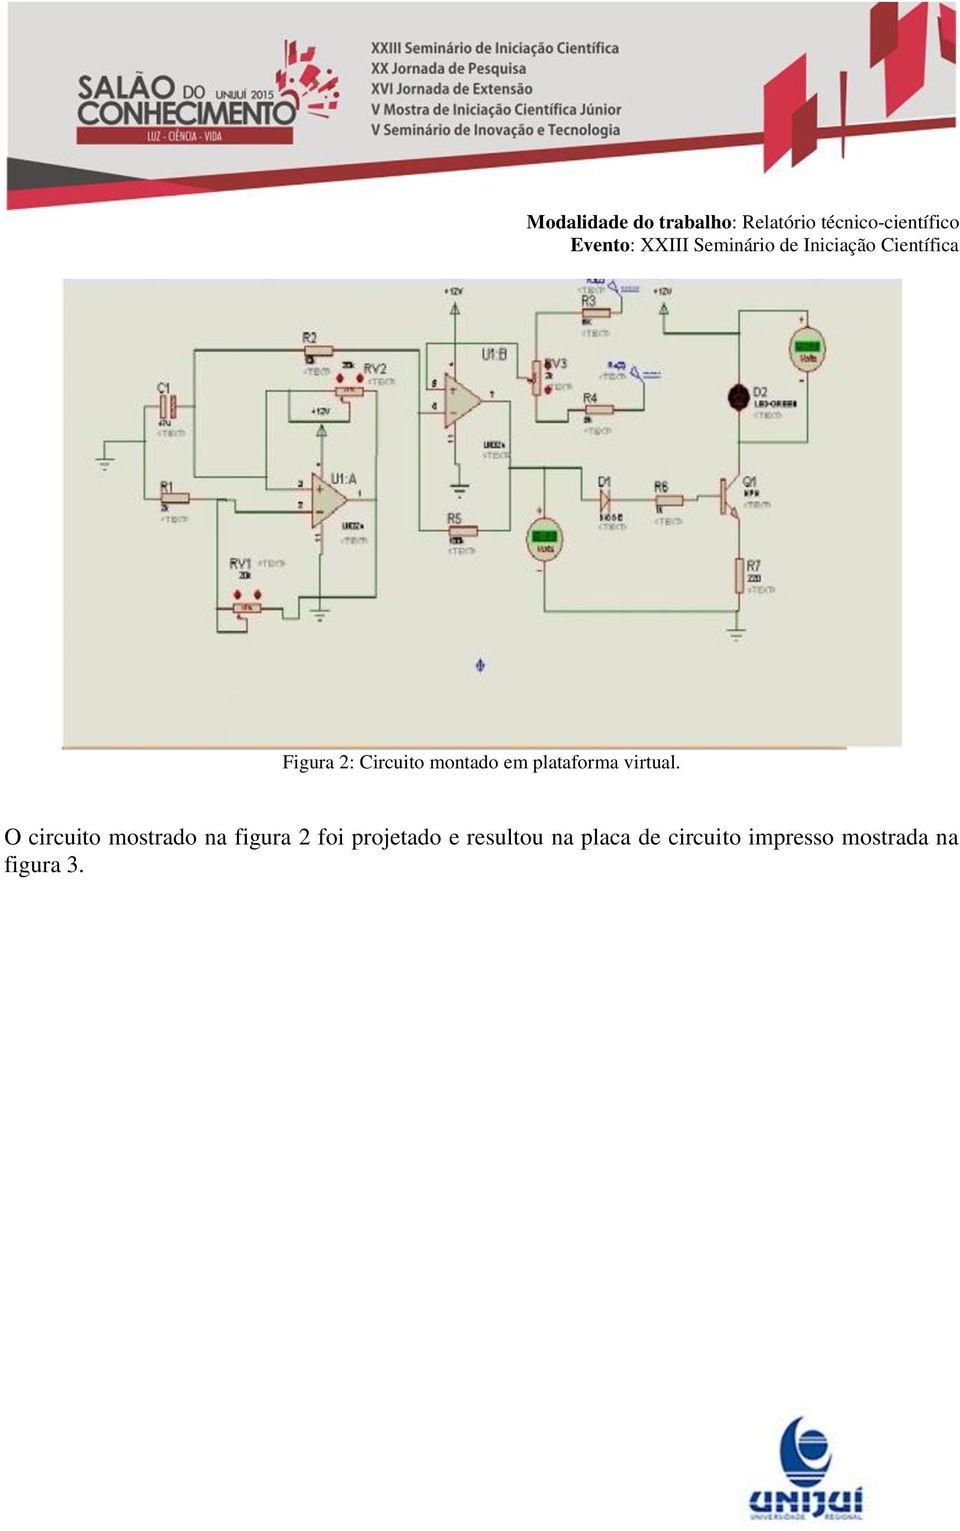 O circuito mostrado na figura 2 foi